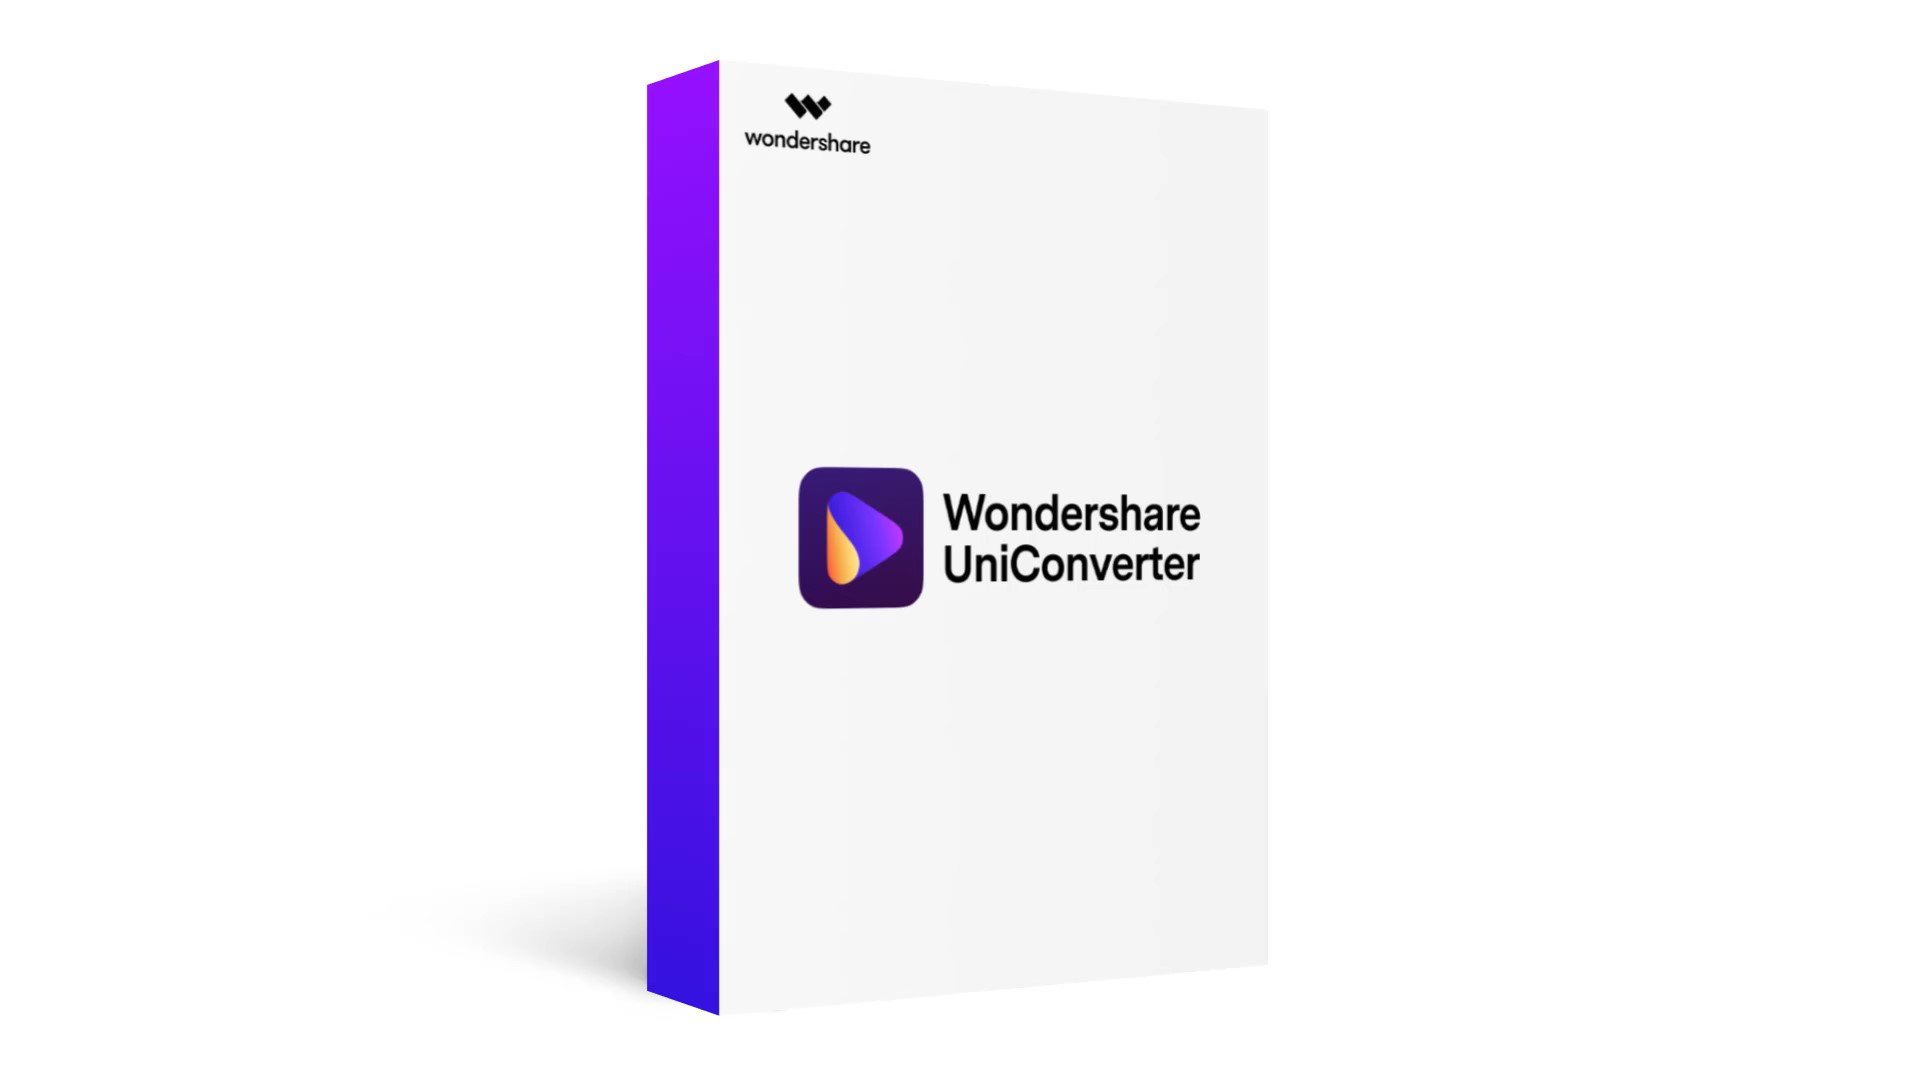 wondershare uniconverter full version free download